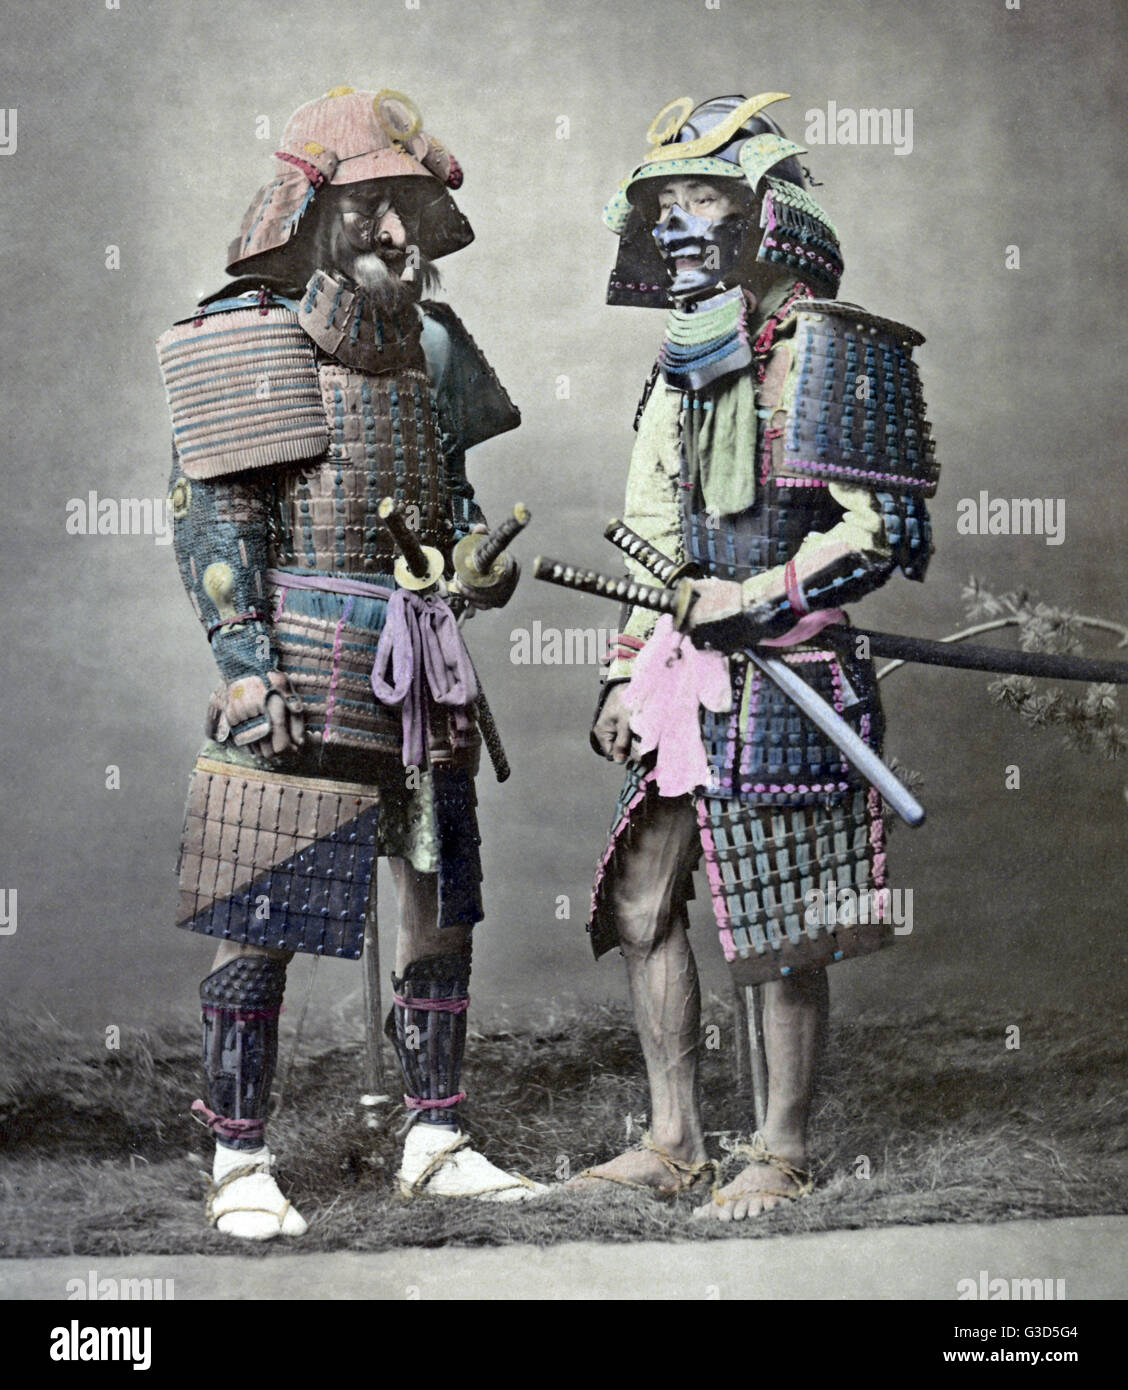 Zwei Samurai-Krieger (wahrscheinlich Schauspieler) Japan, ca. 1880 s.     Datum: ca. 1880 s Stockfoto